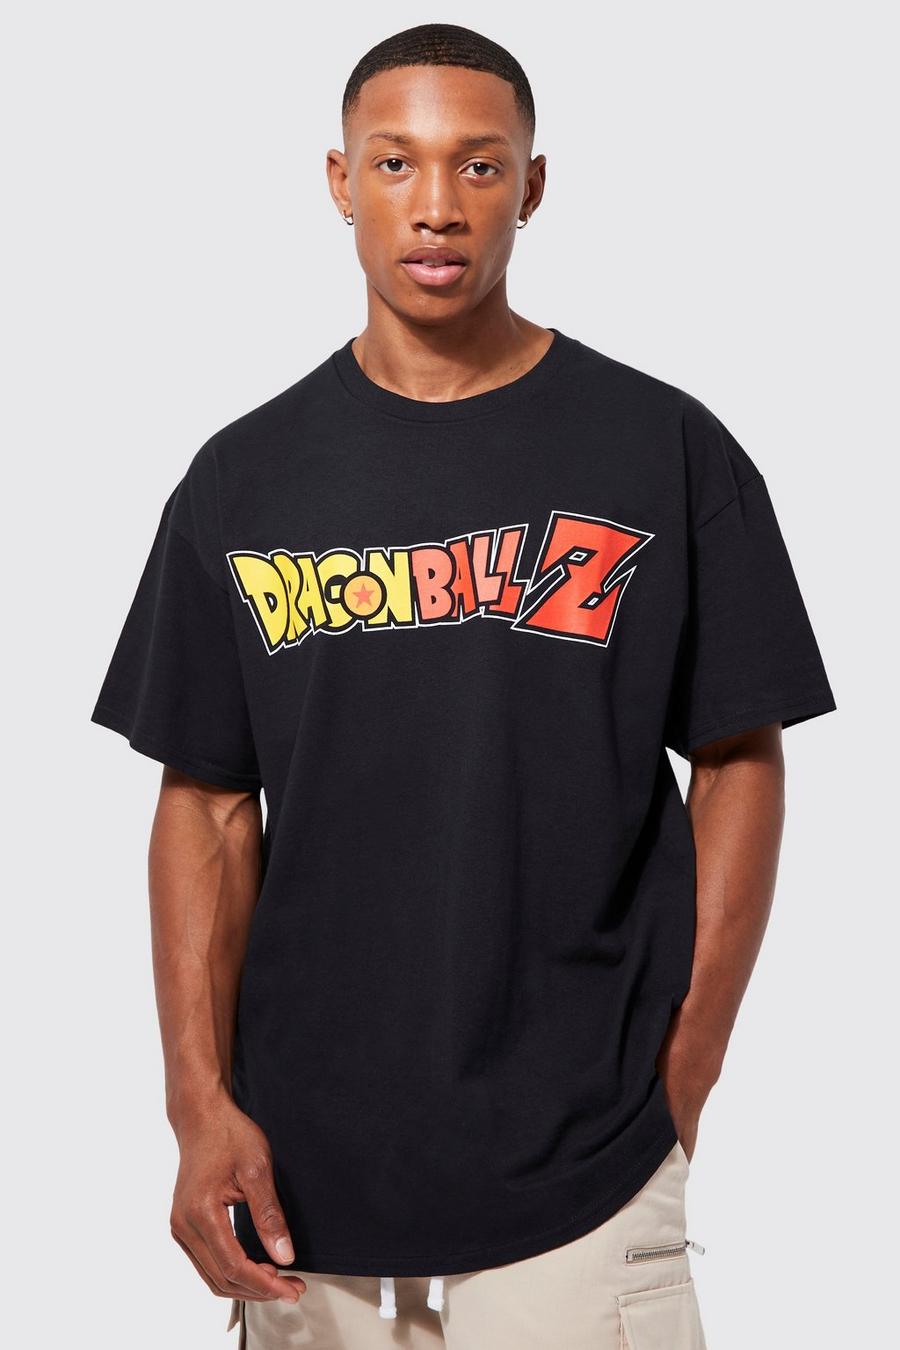 T-shirt oversize ufficiale di Dragonball Z con Goku, Black negro